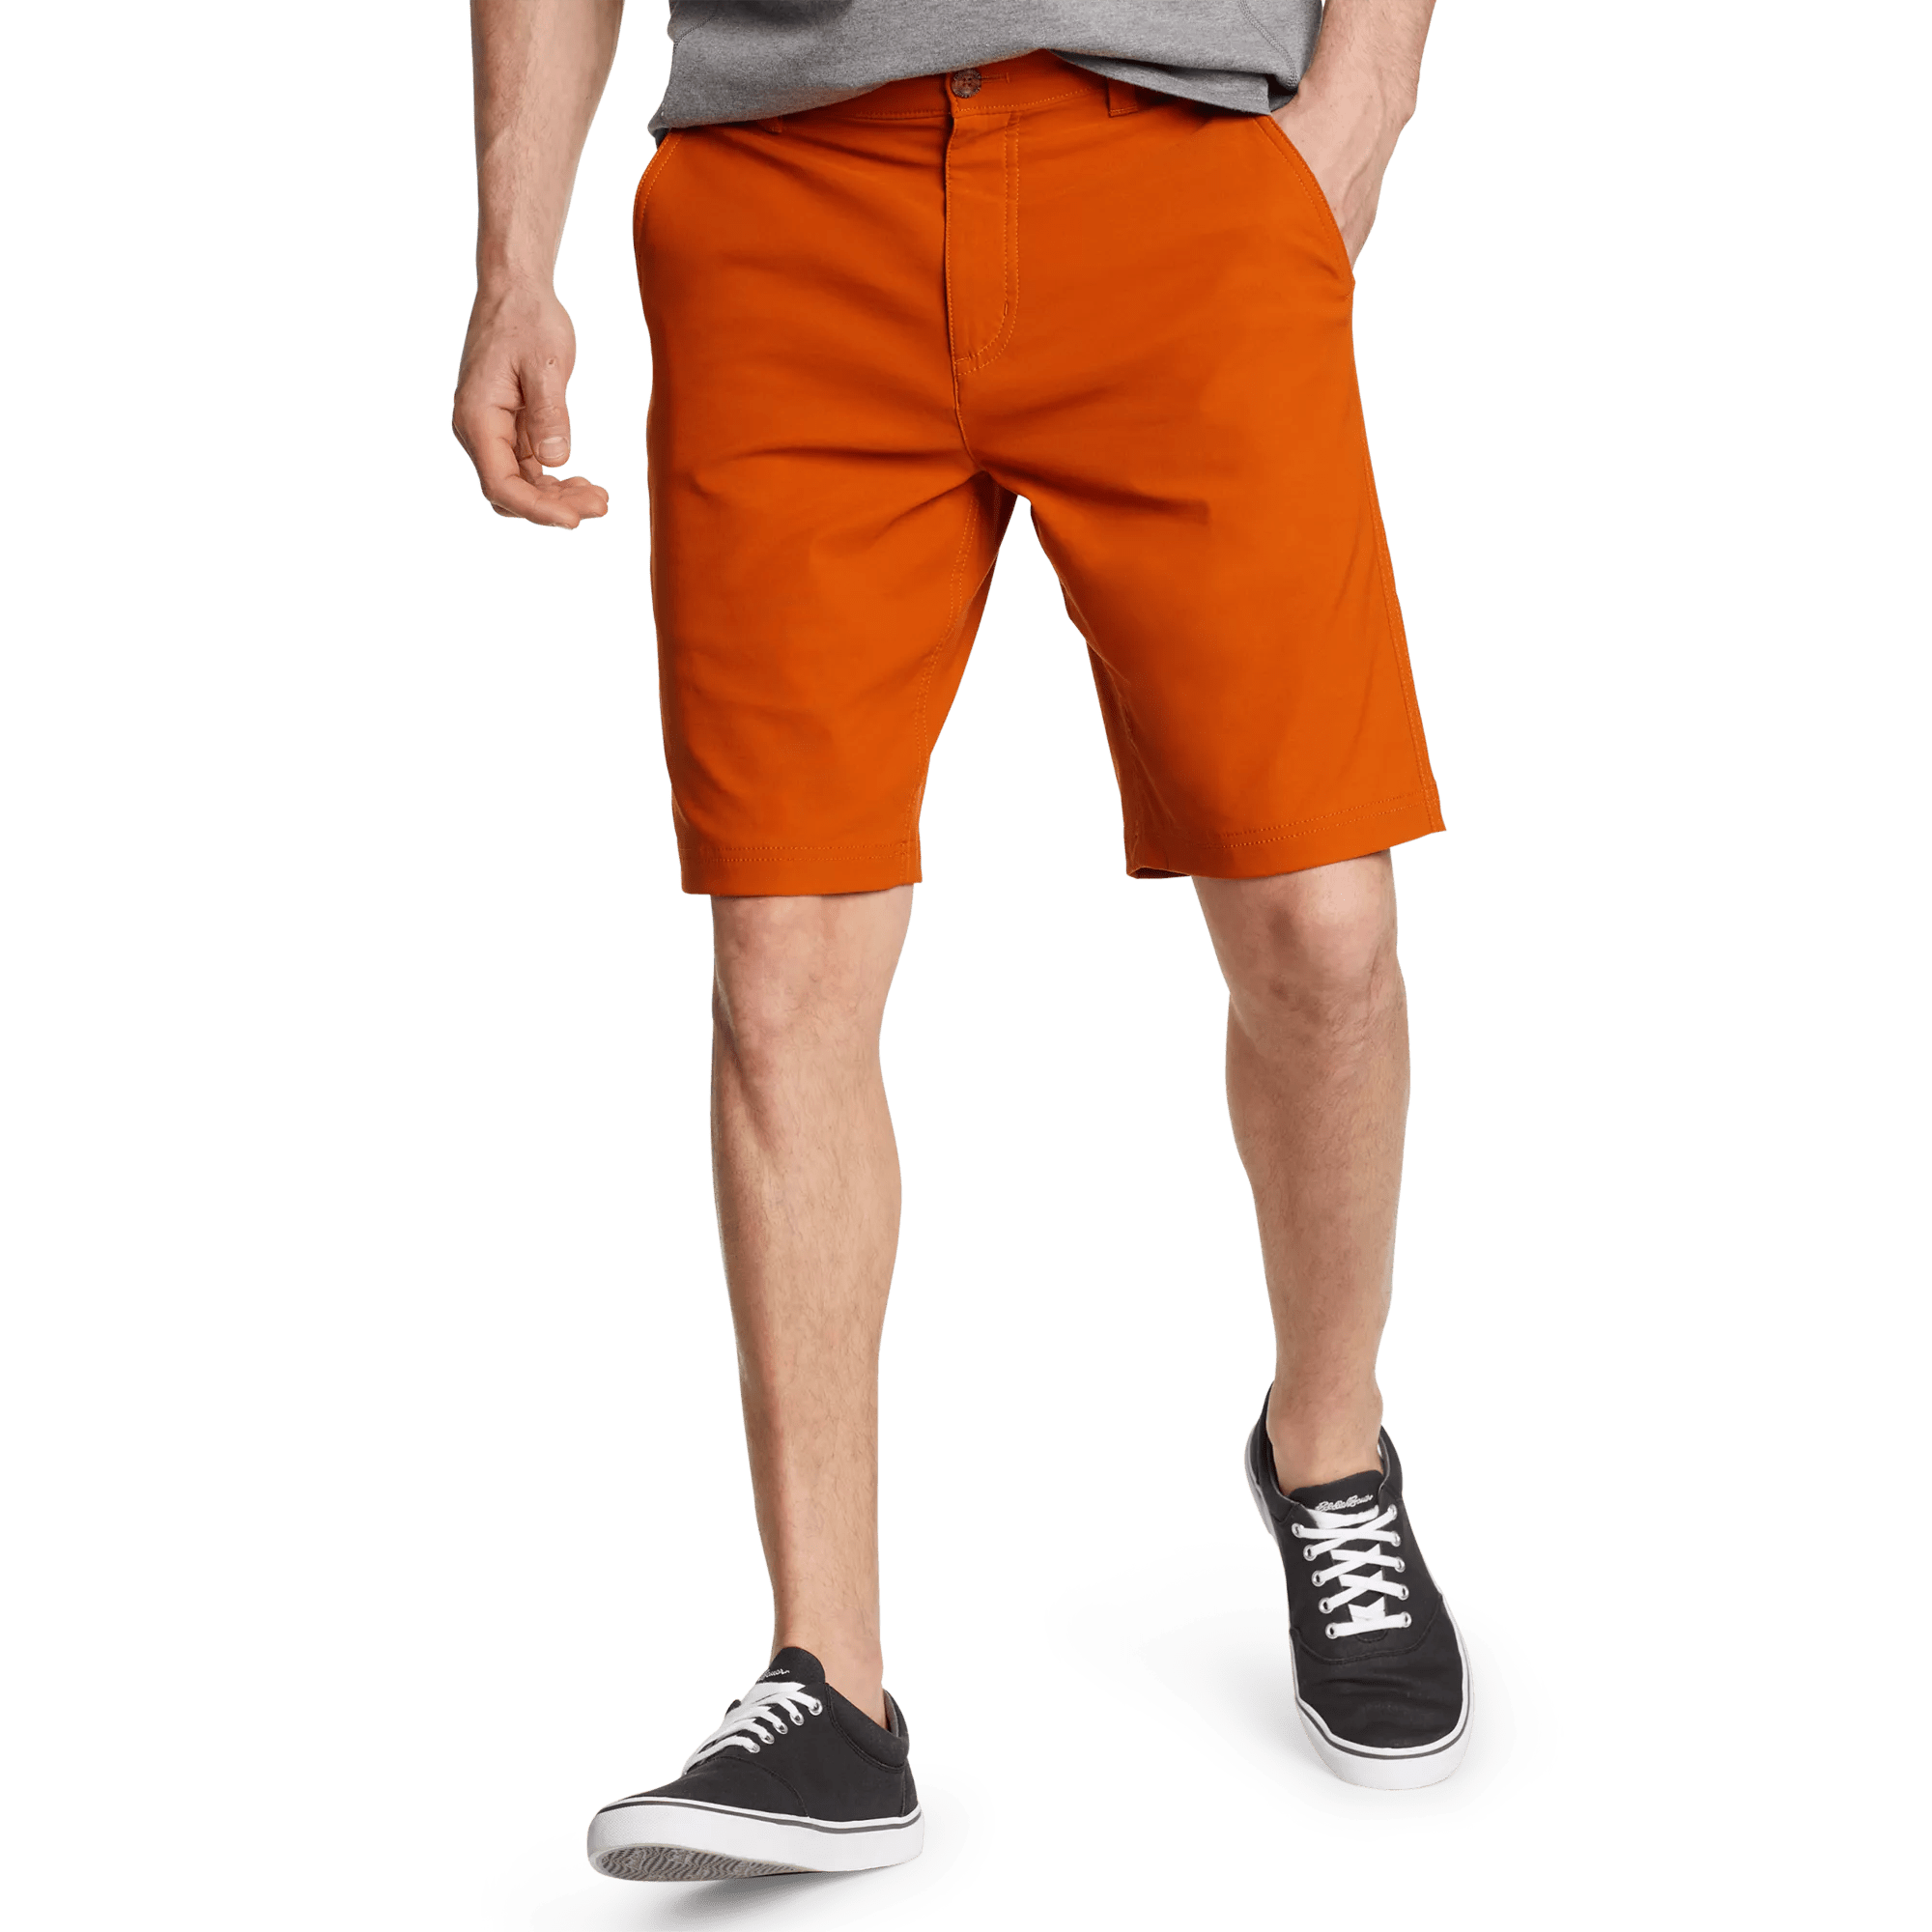 Horizon Guide 10" Chino Shorts